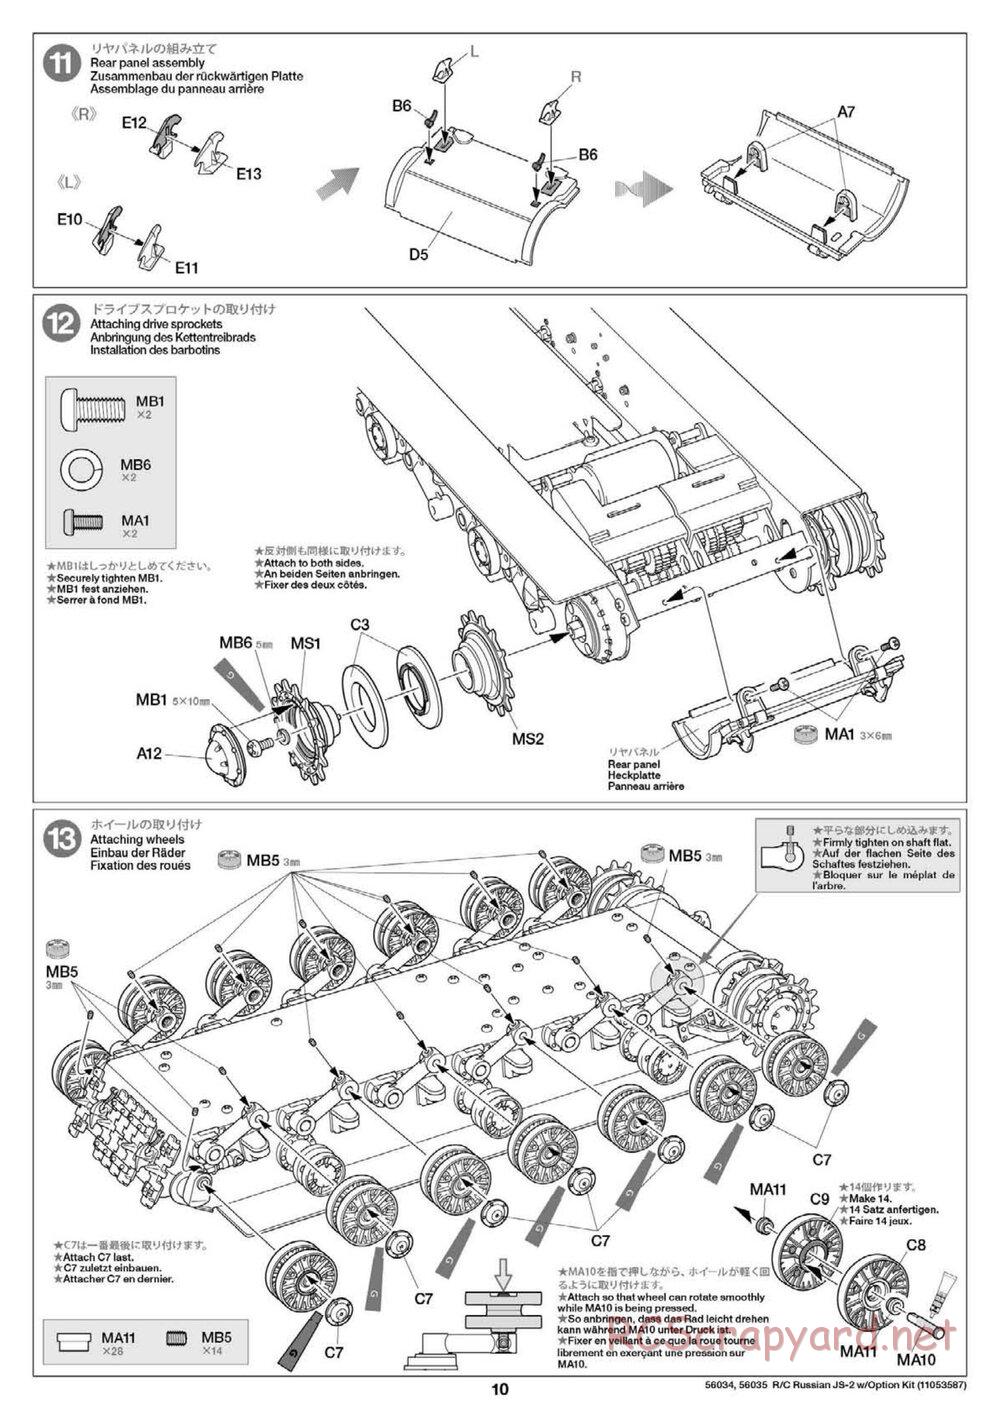 Tamiya - Russian Heavy Tank JS-2 1944 ChKZ - 1/16 Scale Chassis - Manual - Page 10